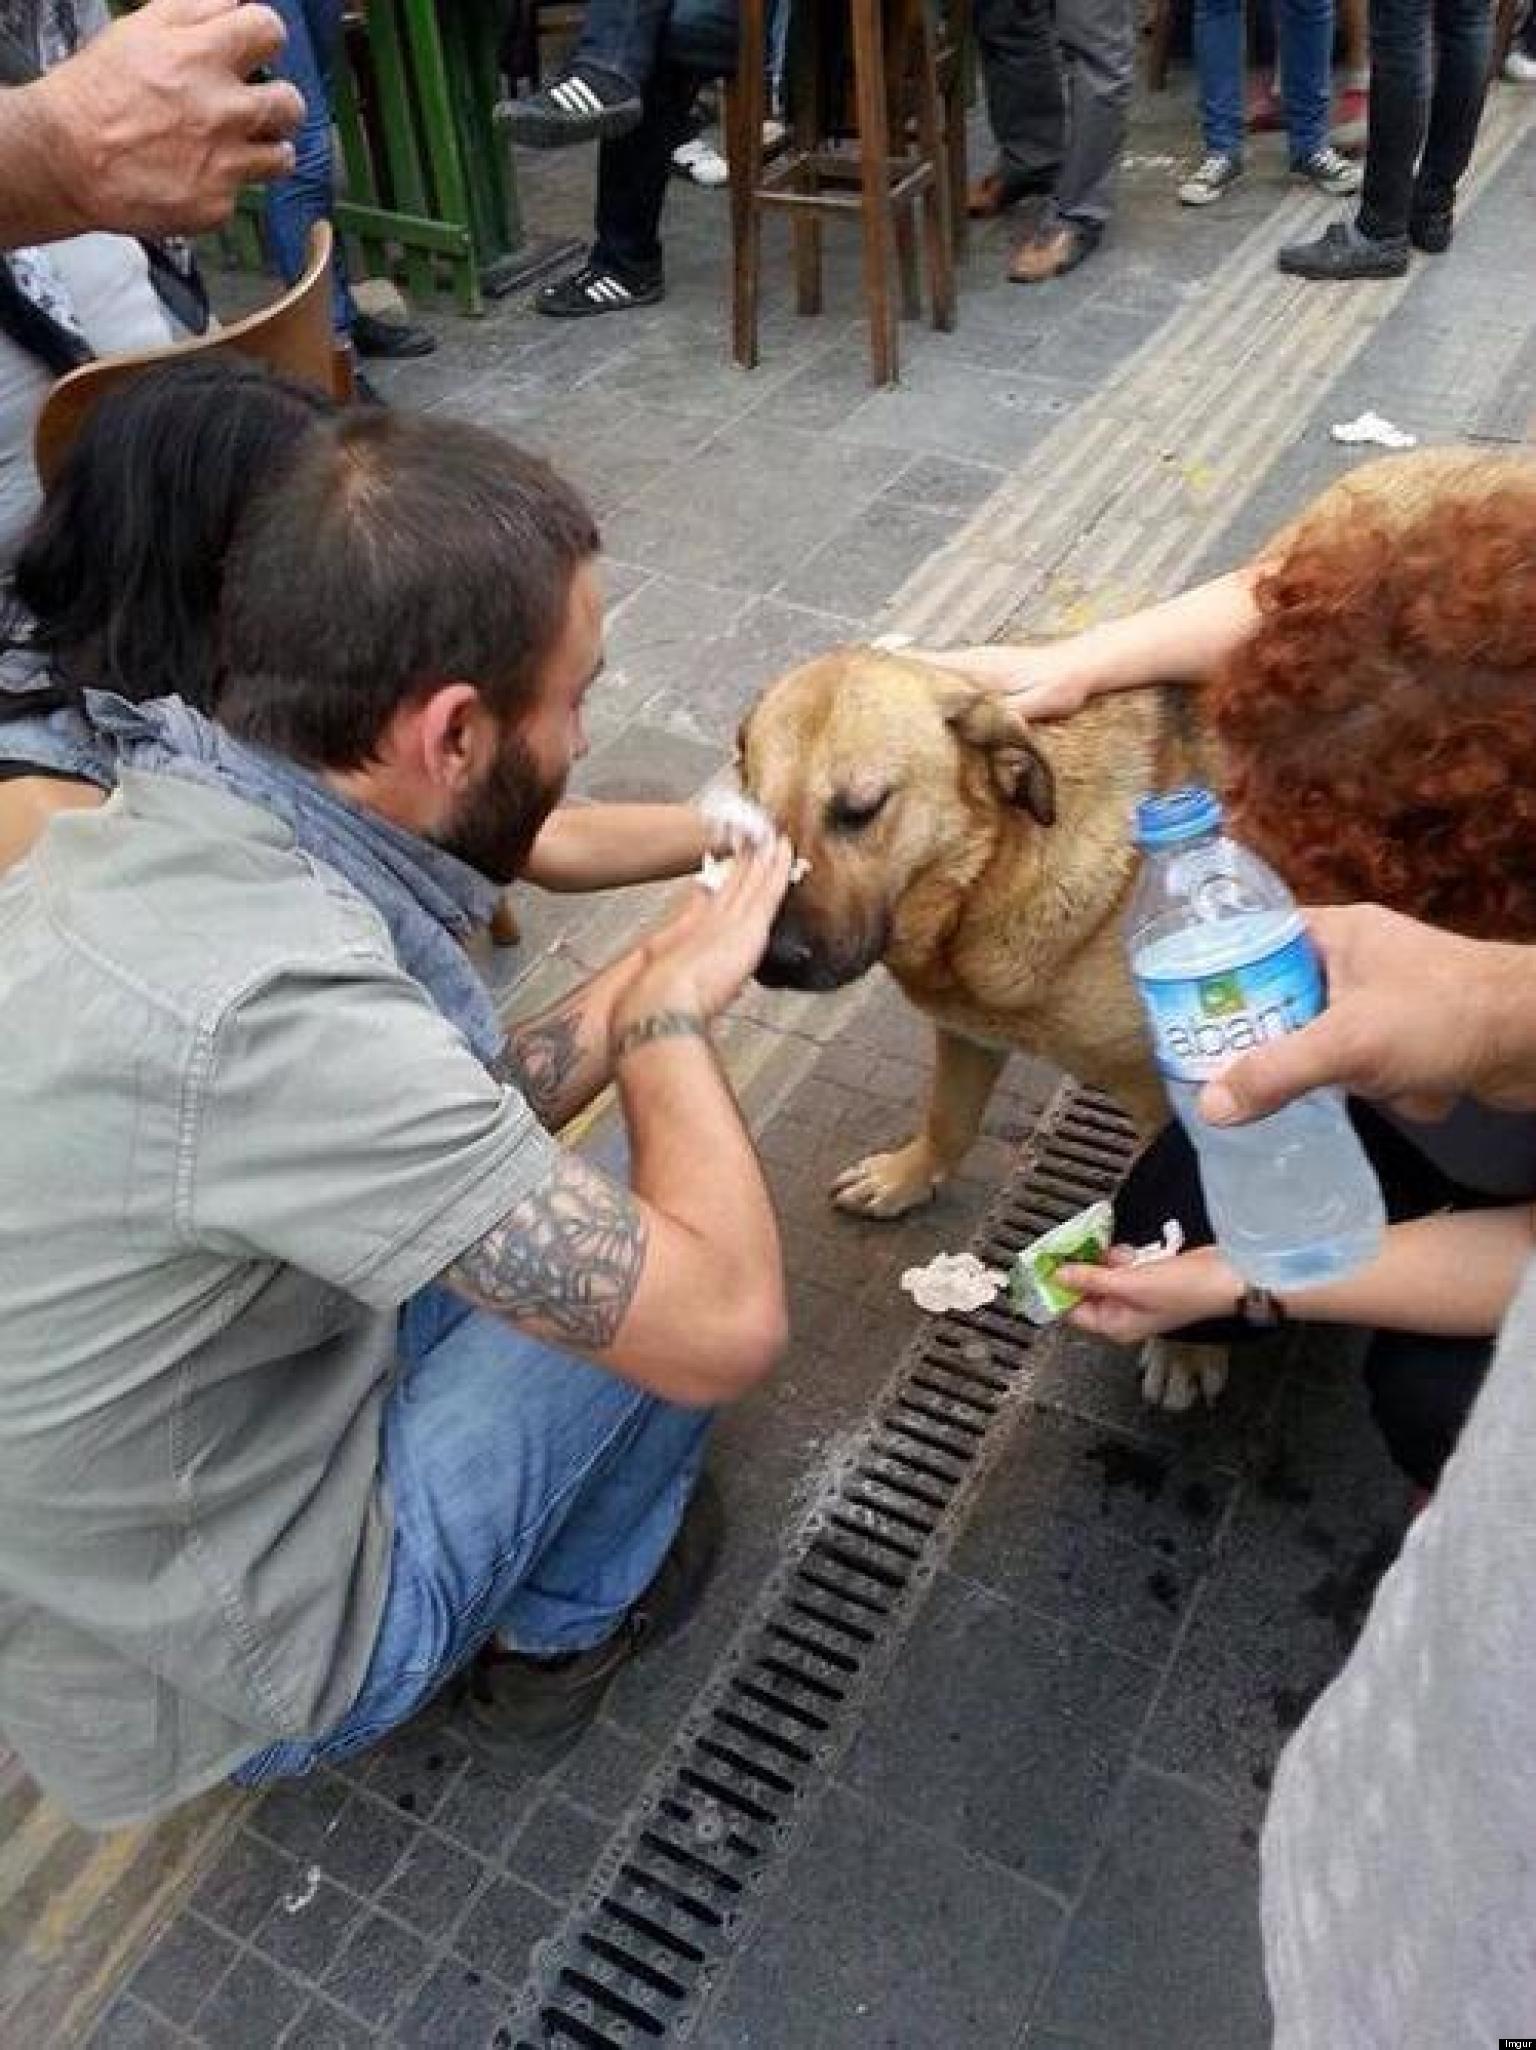 Protesters help a dog affected by tear gas. Ankara, Turkey, 2013